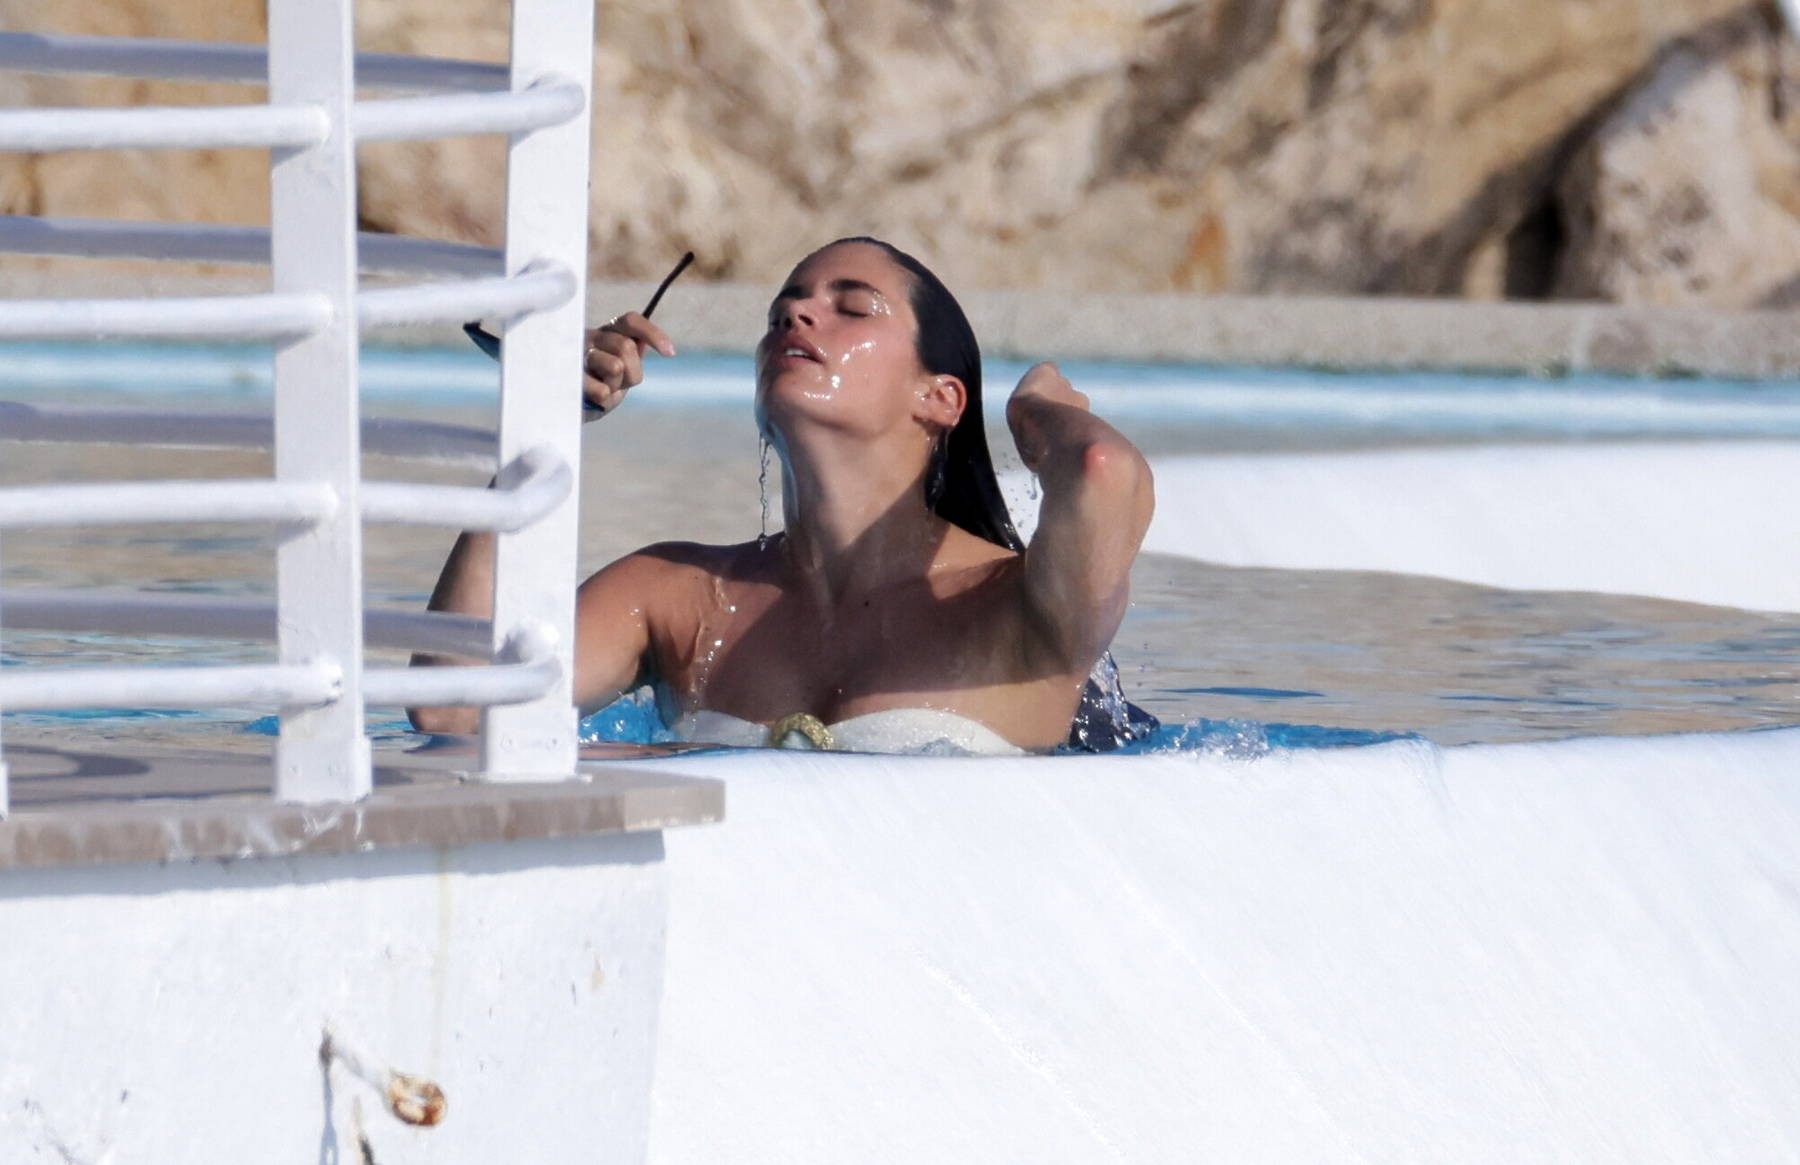 Sara Sampaio spotted in a bikini while enjoying some pool time at